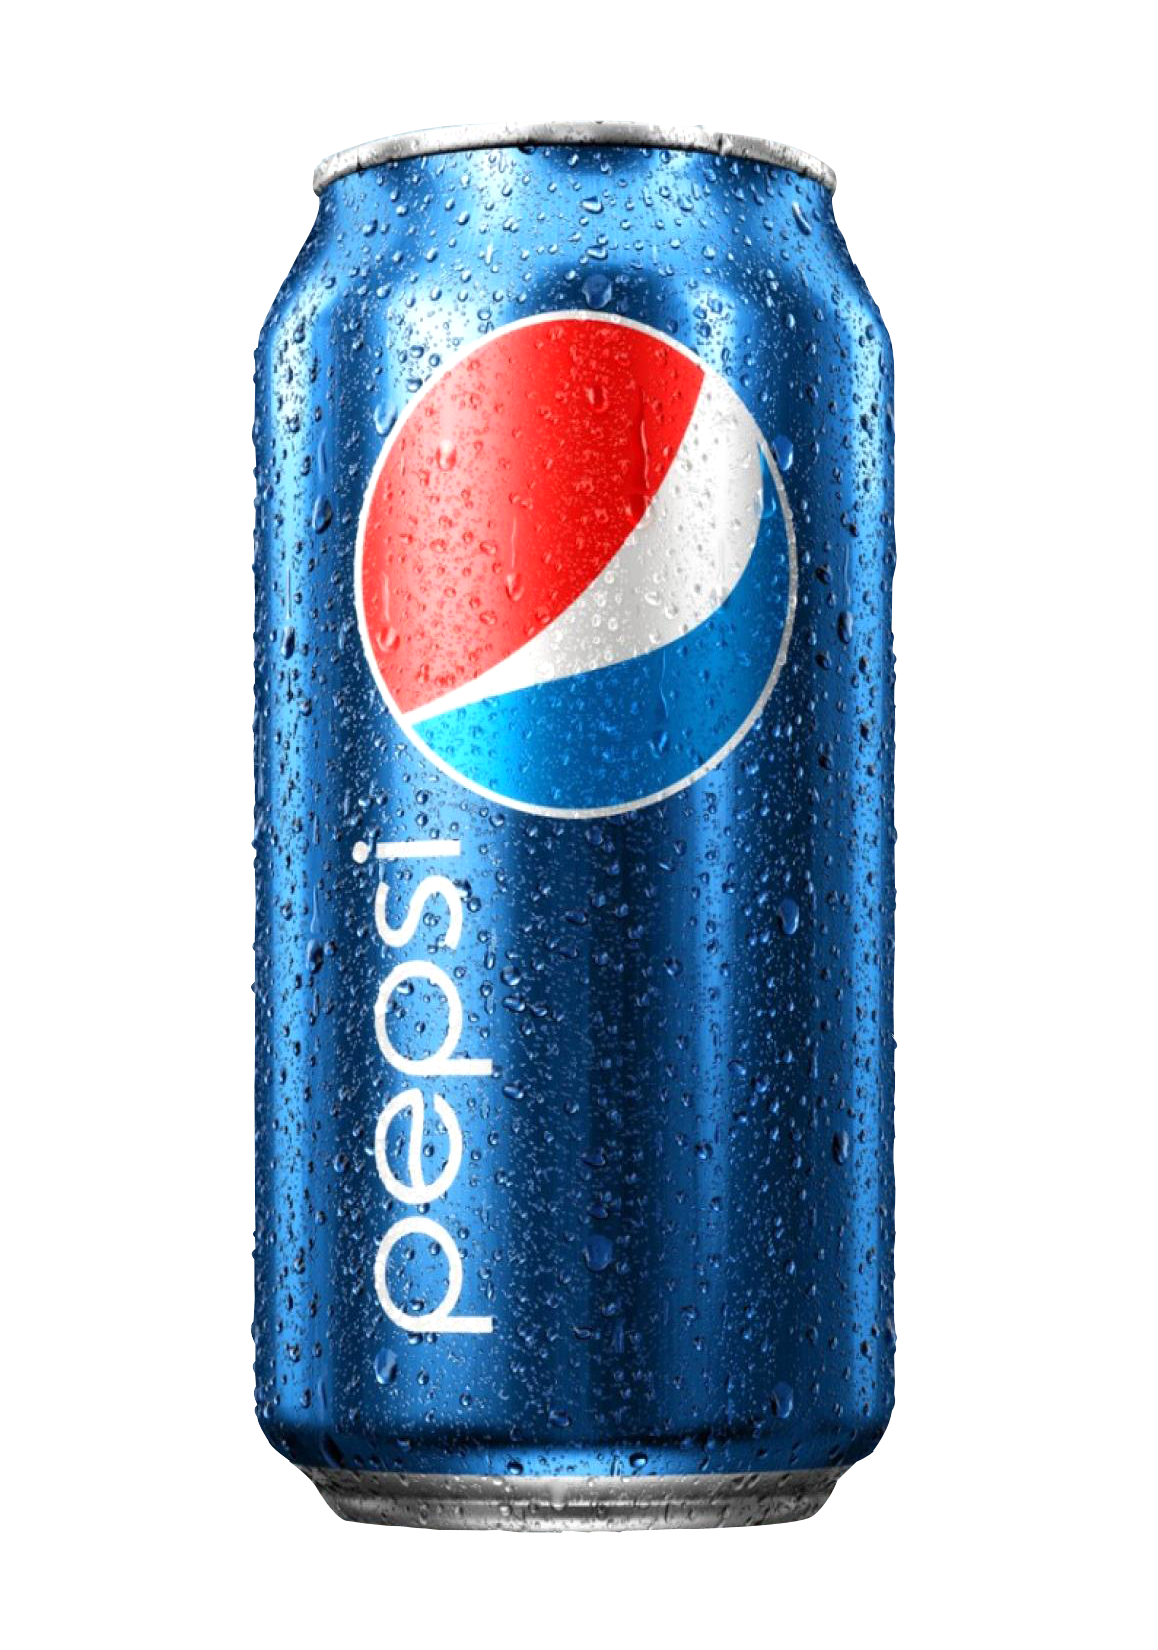 Pepsi PNG Image - PurePNG | Free transparent CC0 PNG Image ...